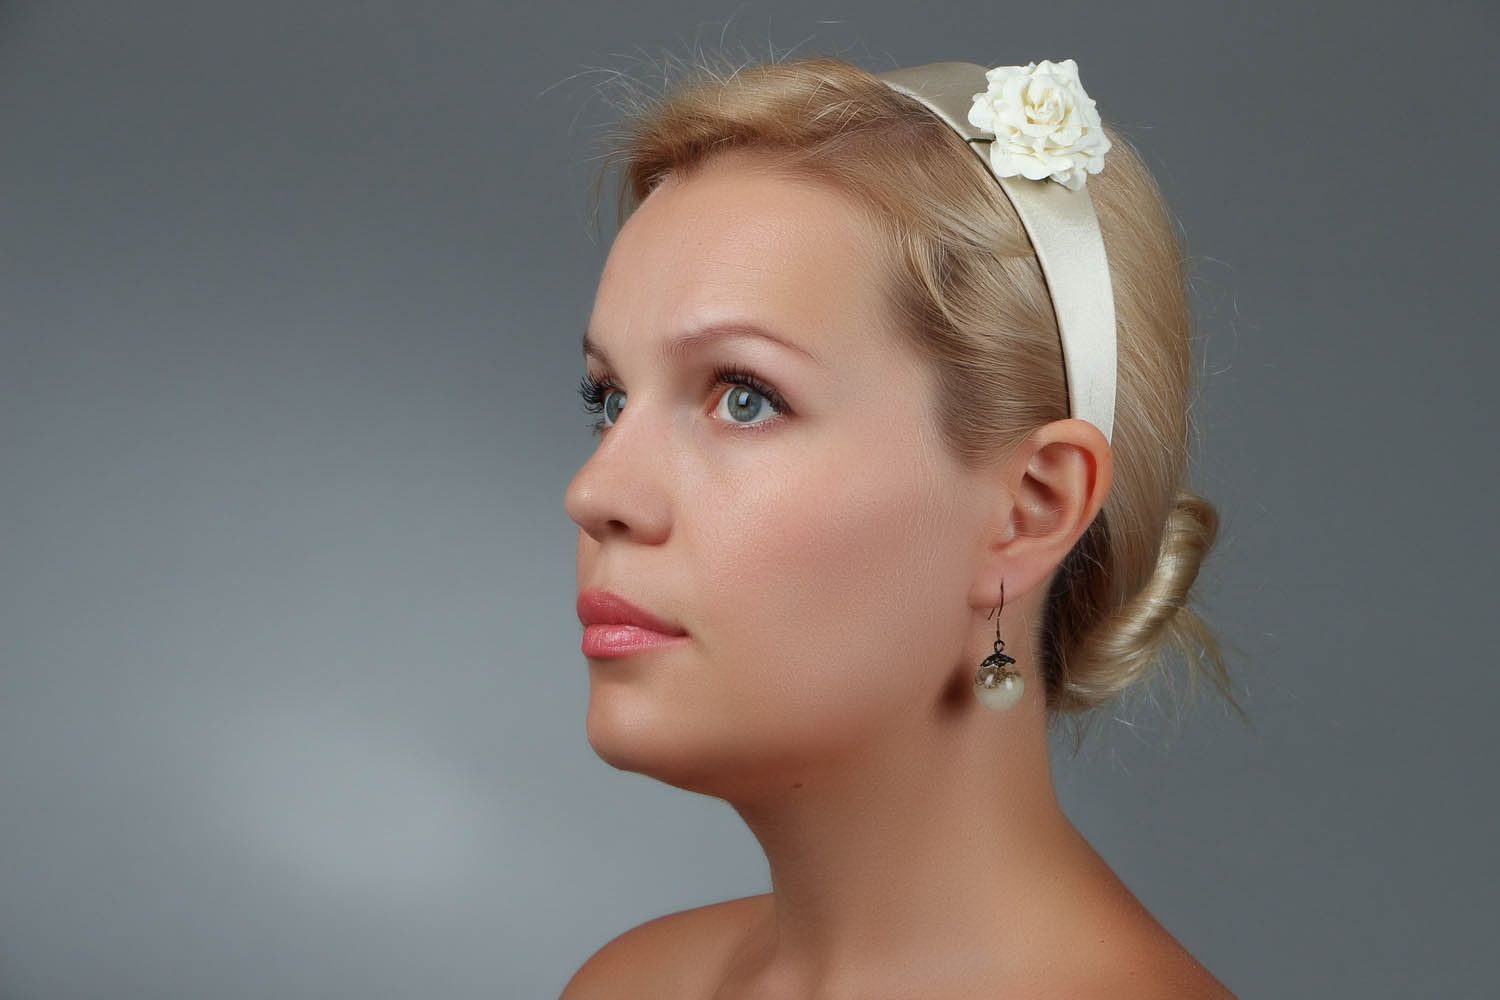 Earrings with dandelions photo 5